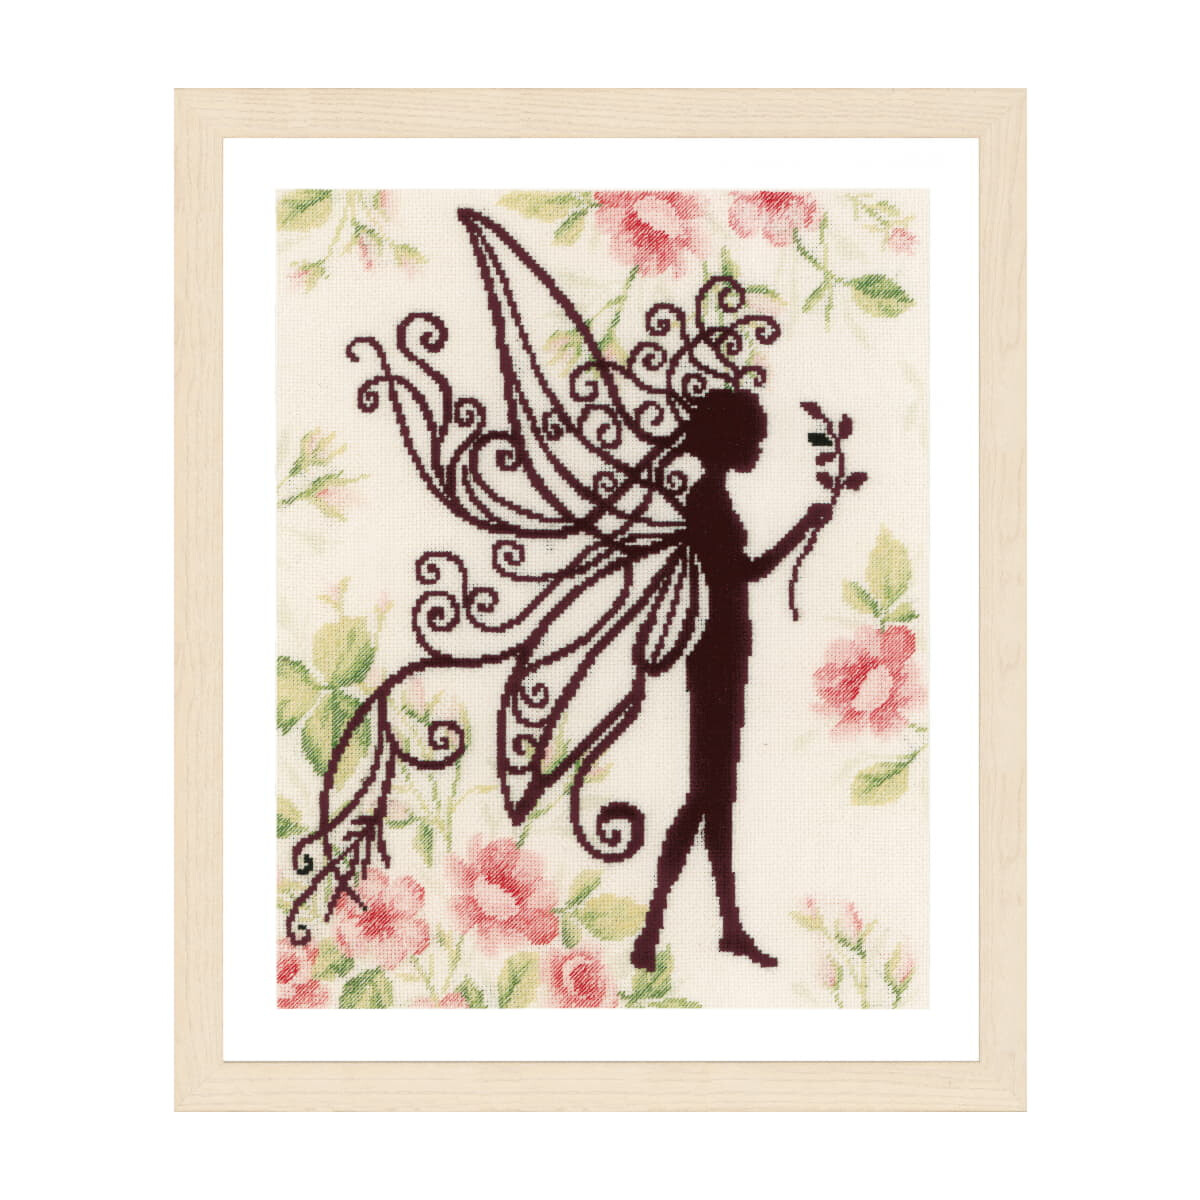 Lanarte counted cross stitch kit "Flower fairy...